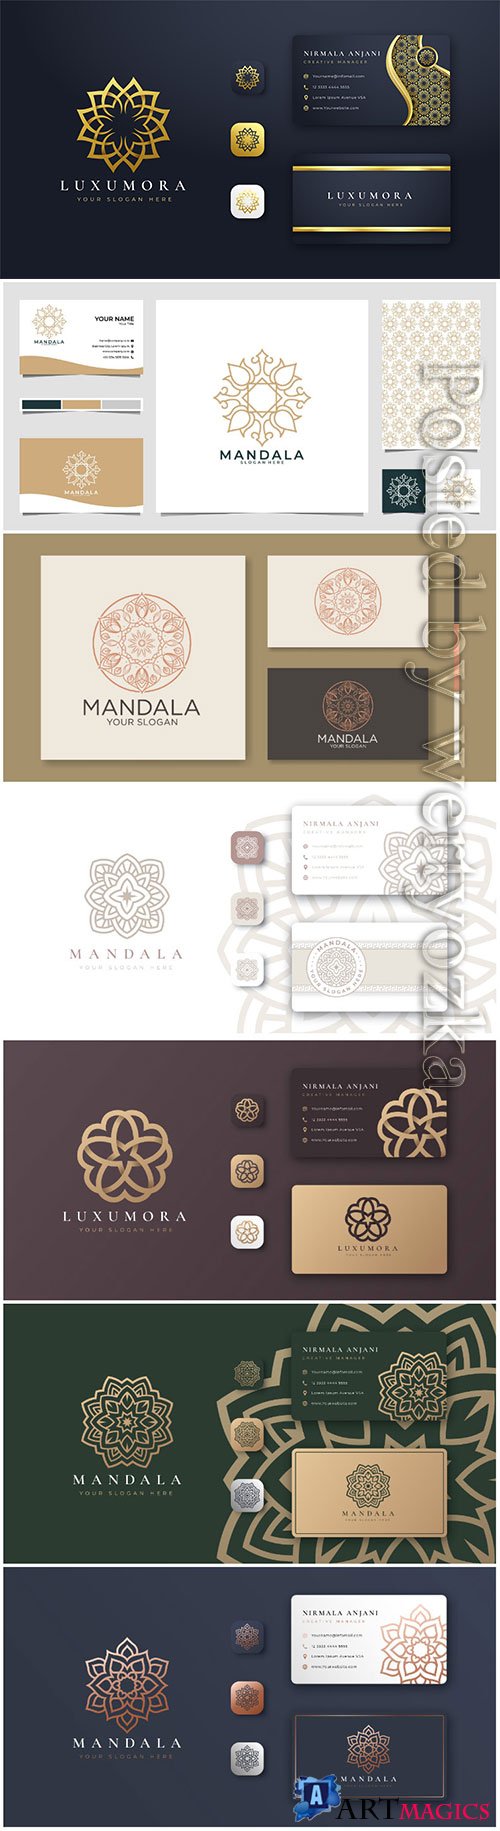 Golden mandala logo with business card premium vector